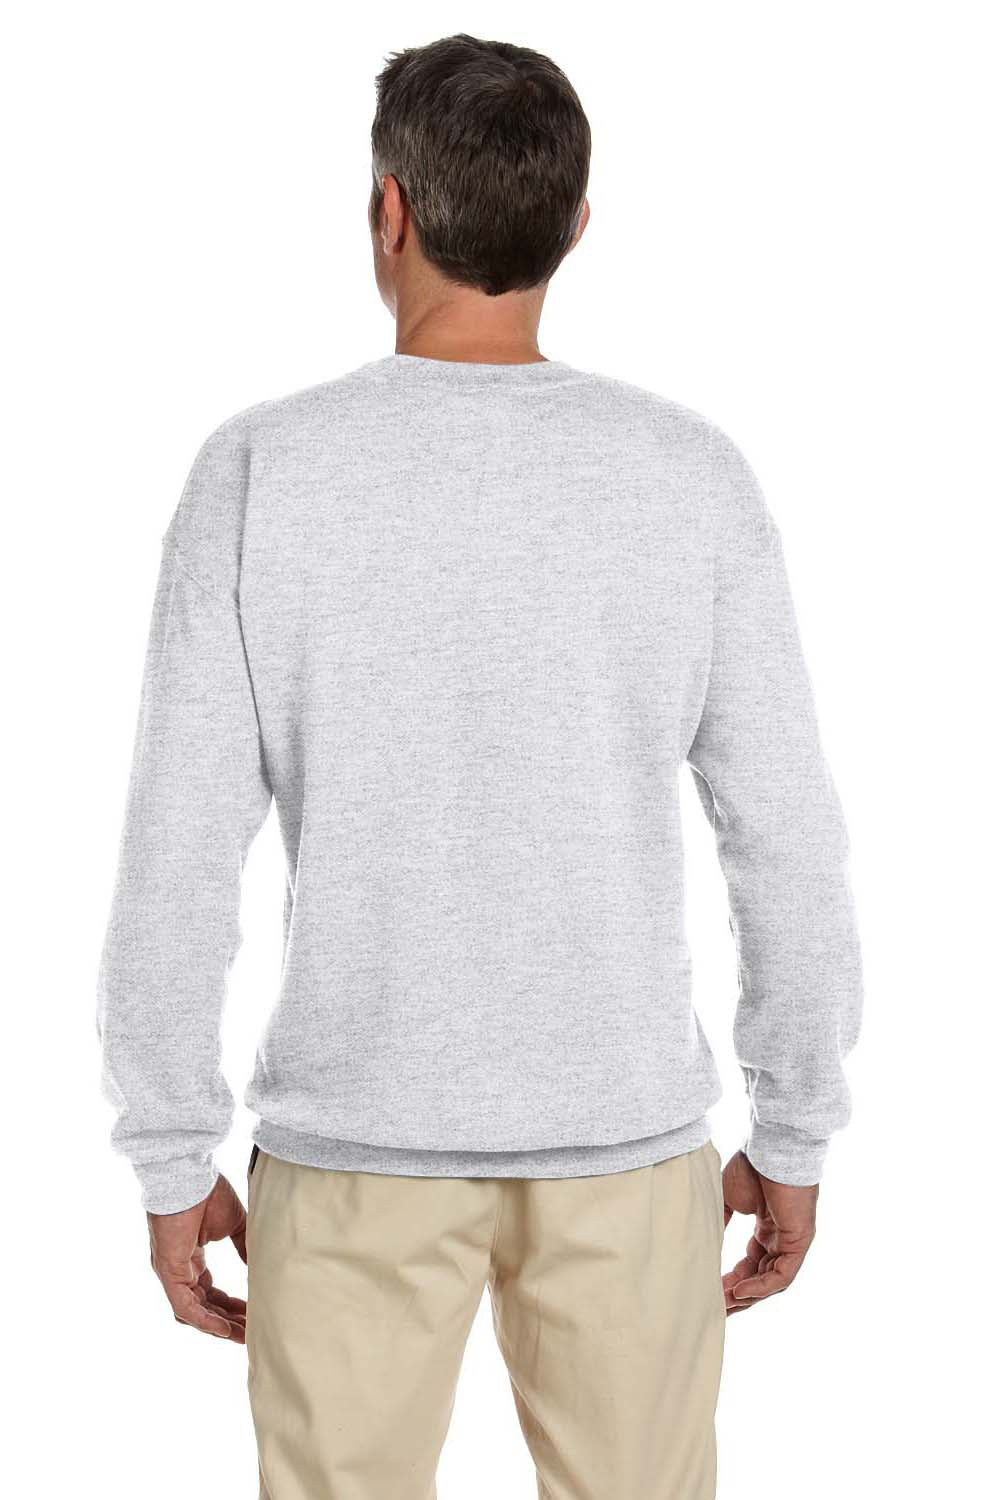 Gildan Mens Pill Resistant Fleece Crewneck Sweatshirt - Ash Grey